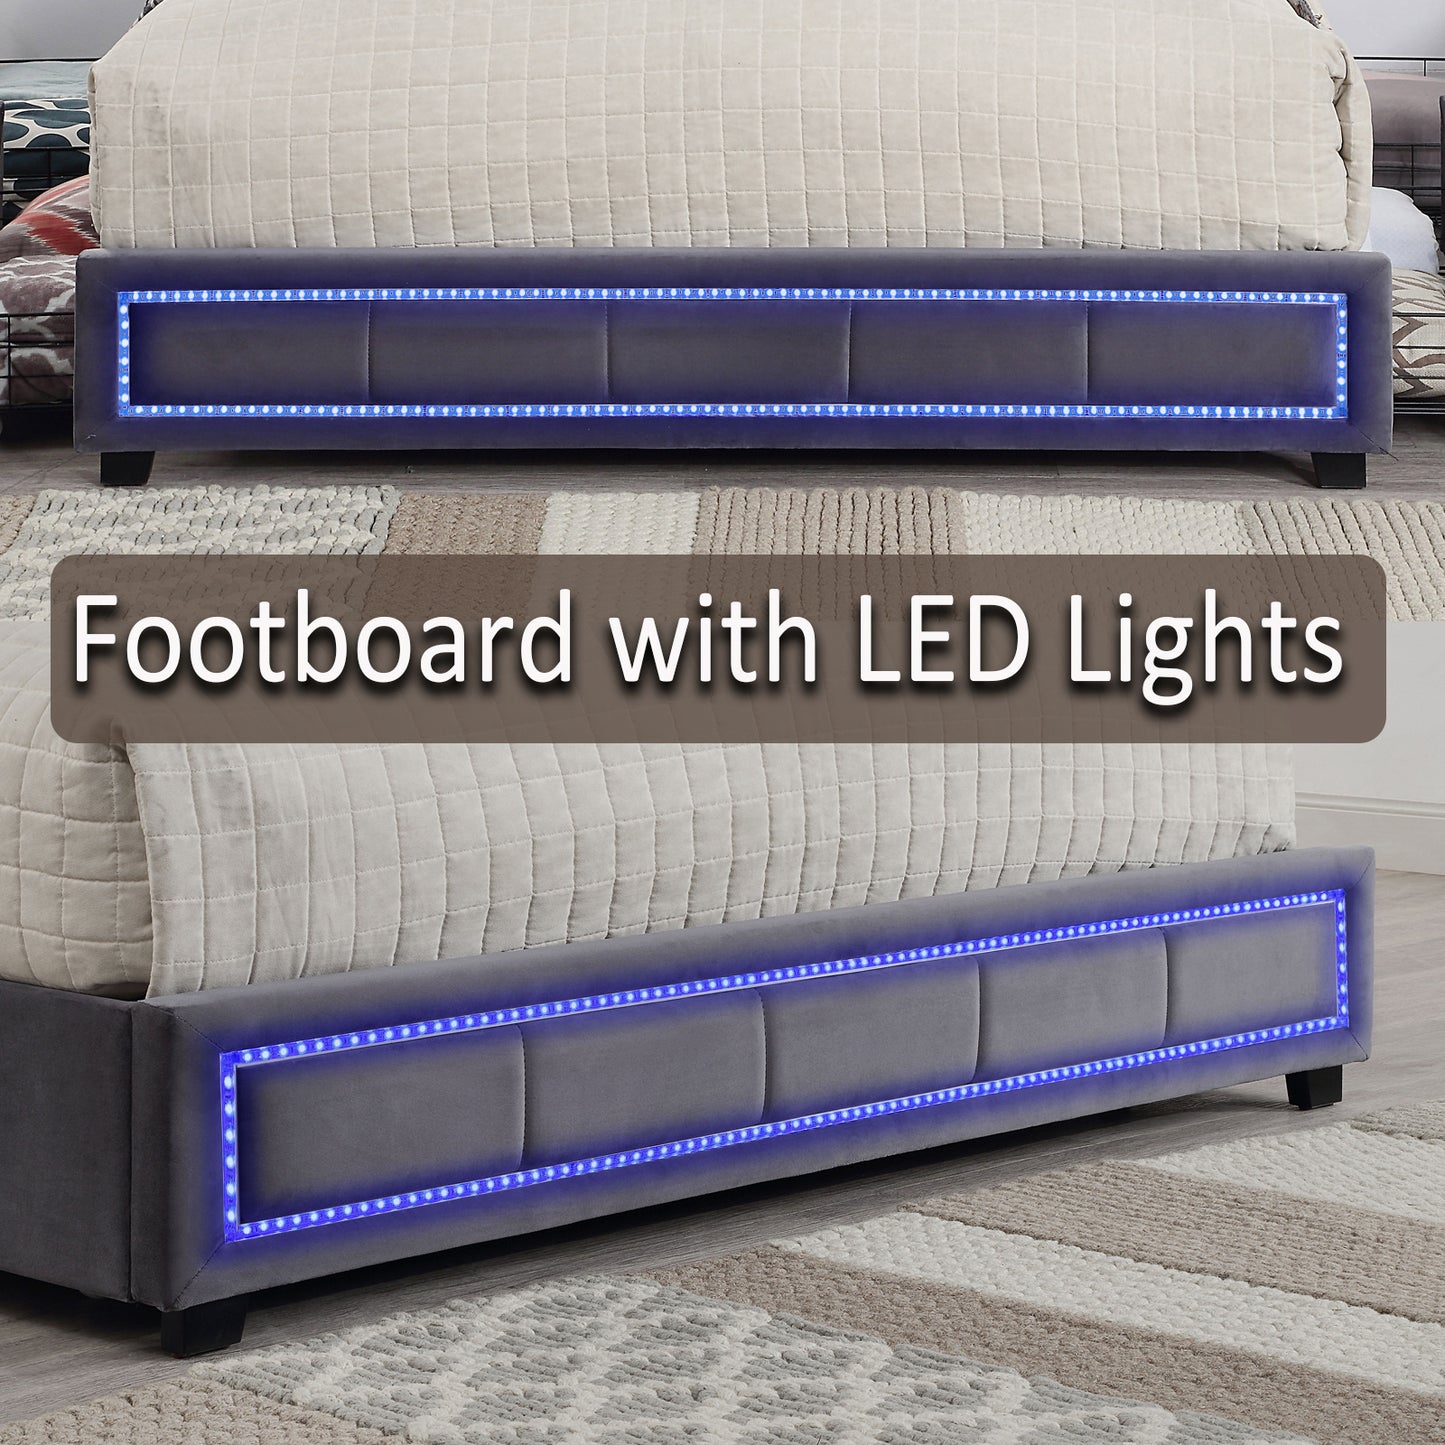 upholstered bed with led lights, 4 drawer storage, grey